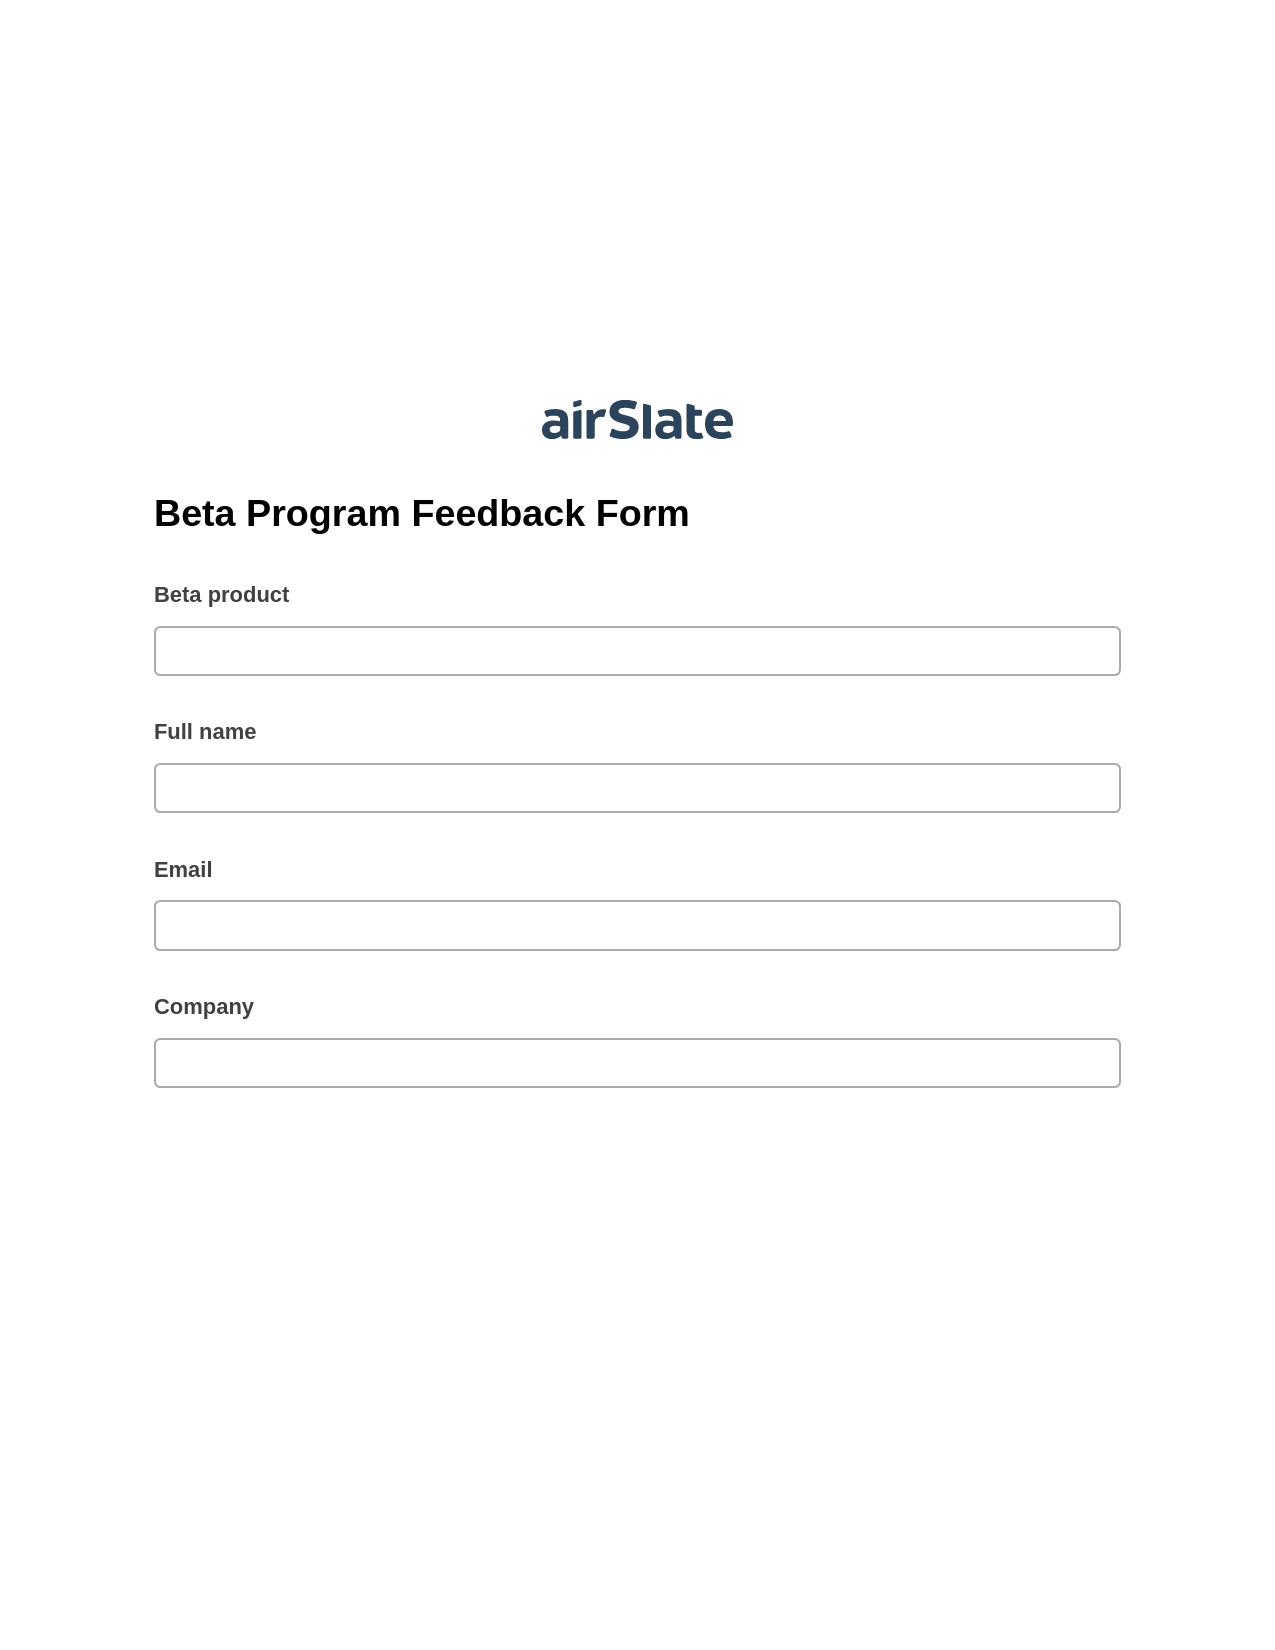 Beta Program Feedback Form Pre-fill Slate from MS Dynamics 365 Records Bot, Webhook Bot, Webhook Postfinish Bot